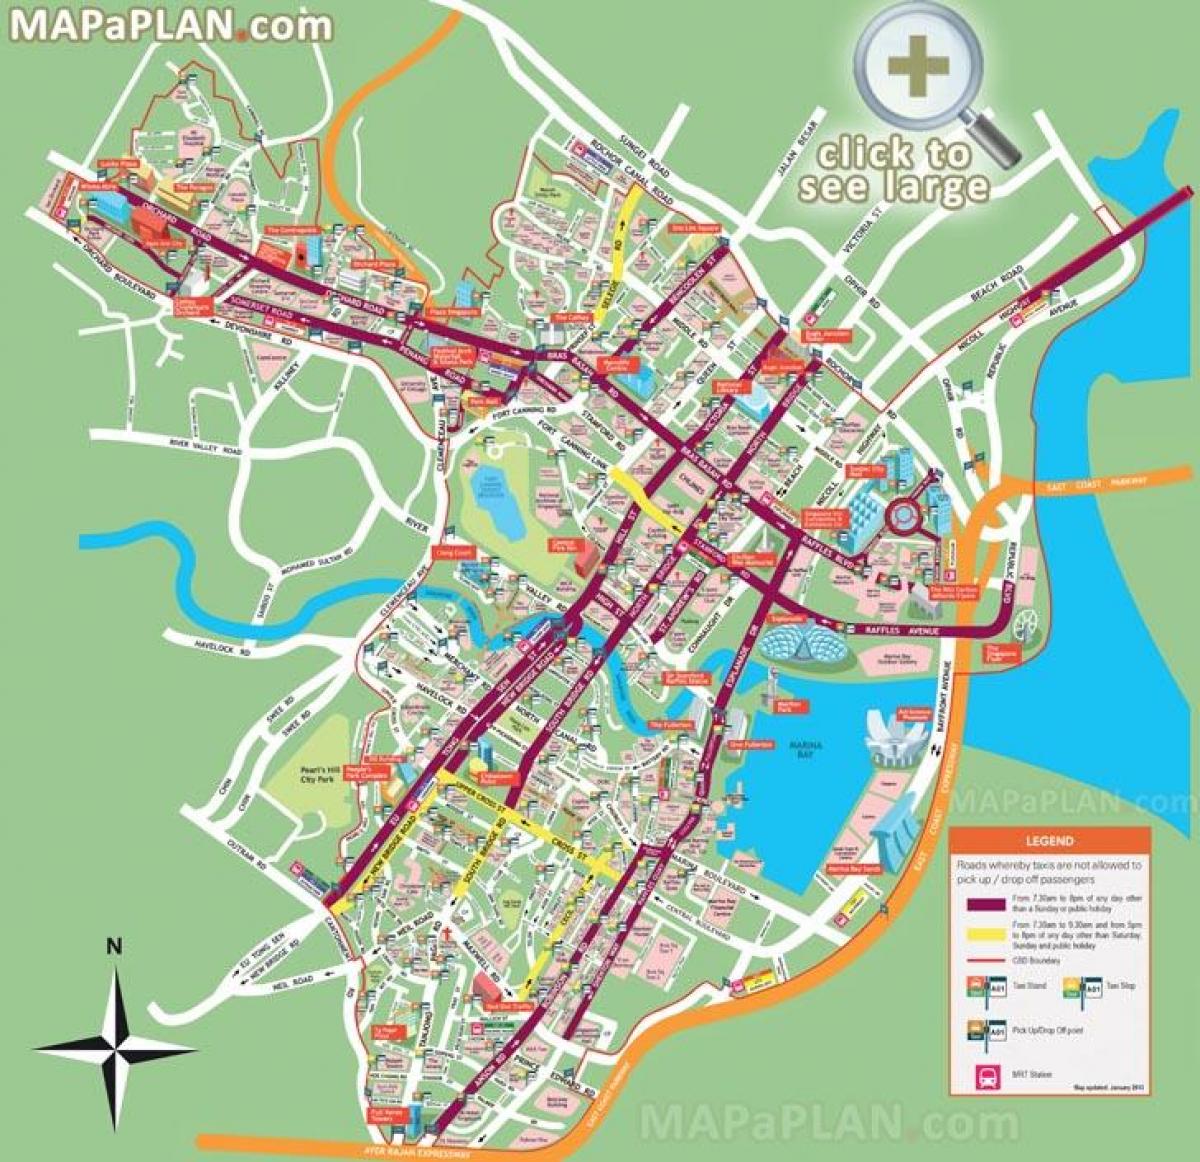 Singapurren turismo lekuak mapa